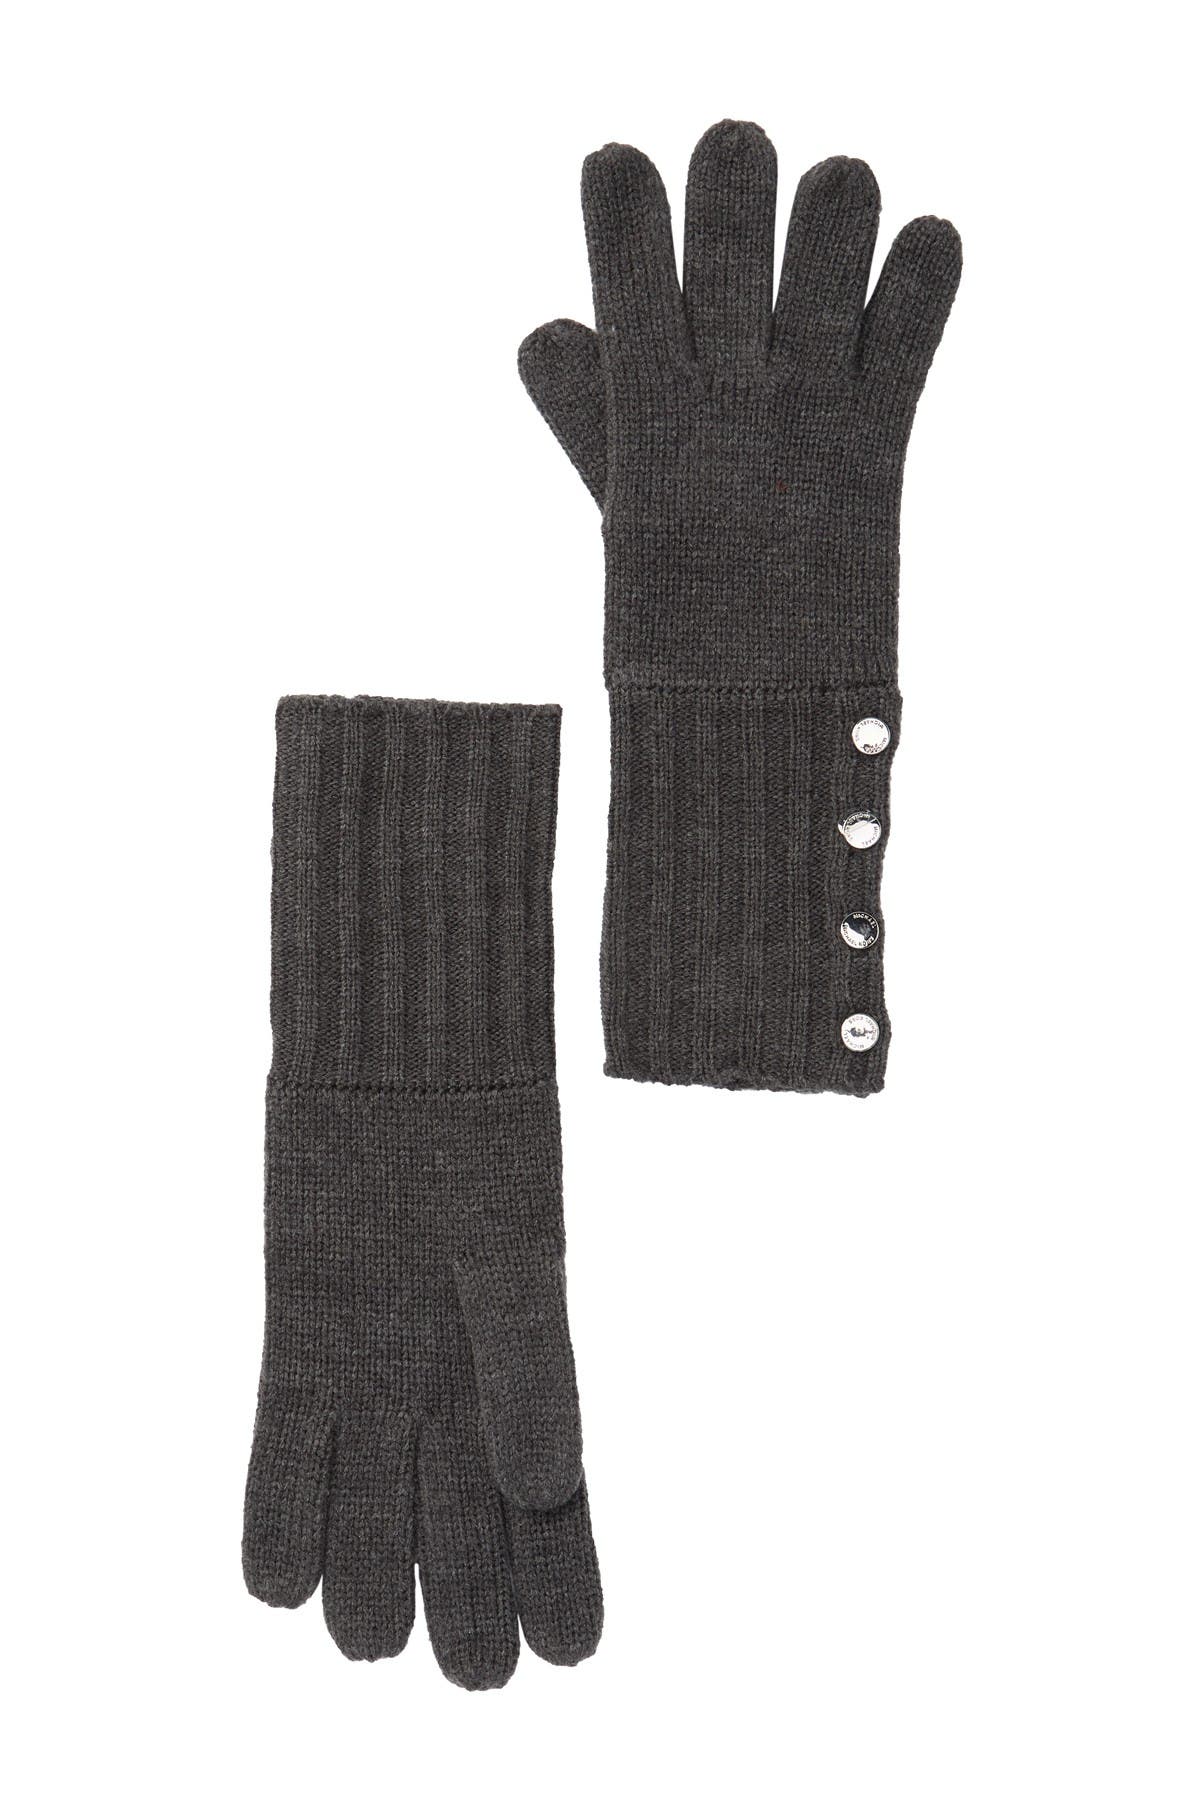 Michael Kors | Ribbed Knit Gloves 